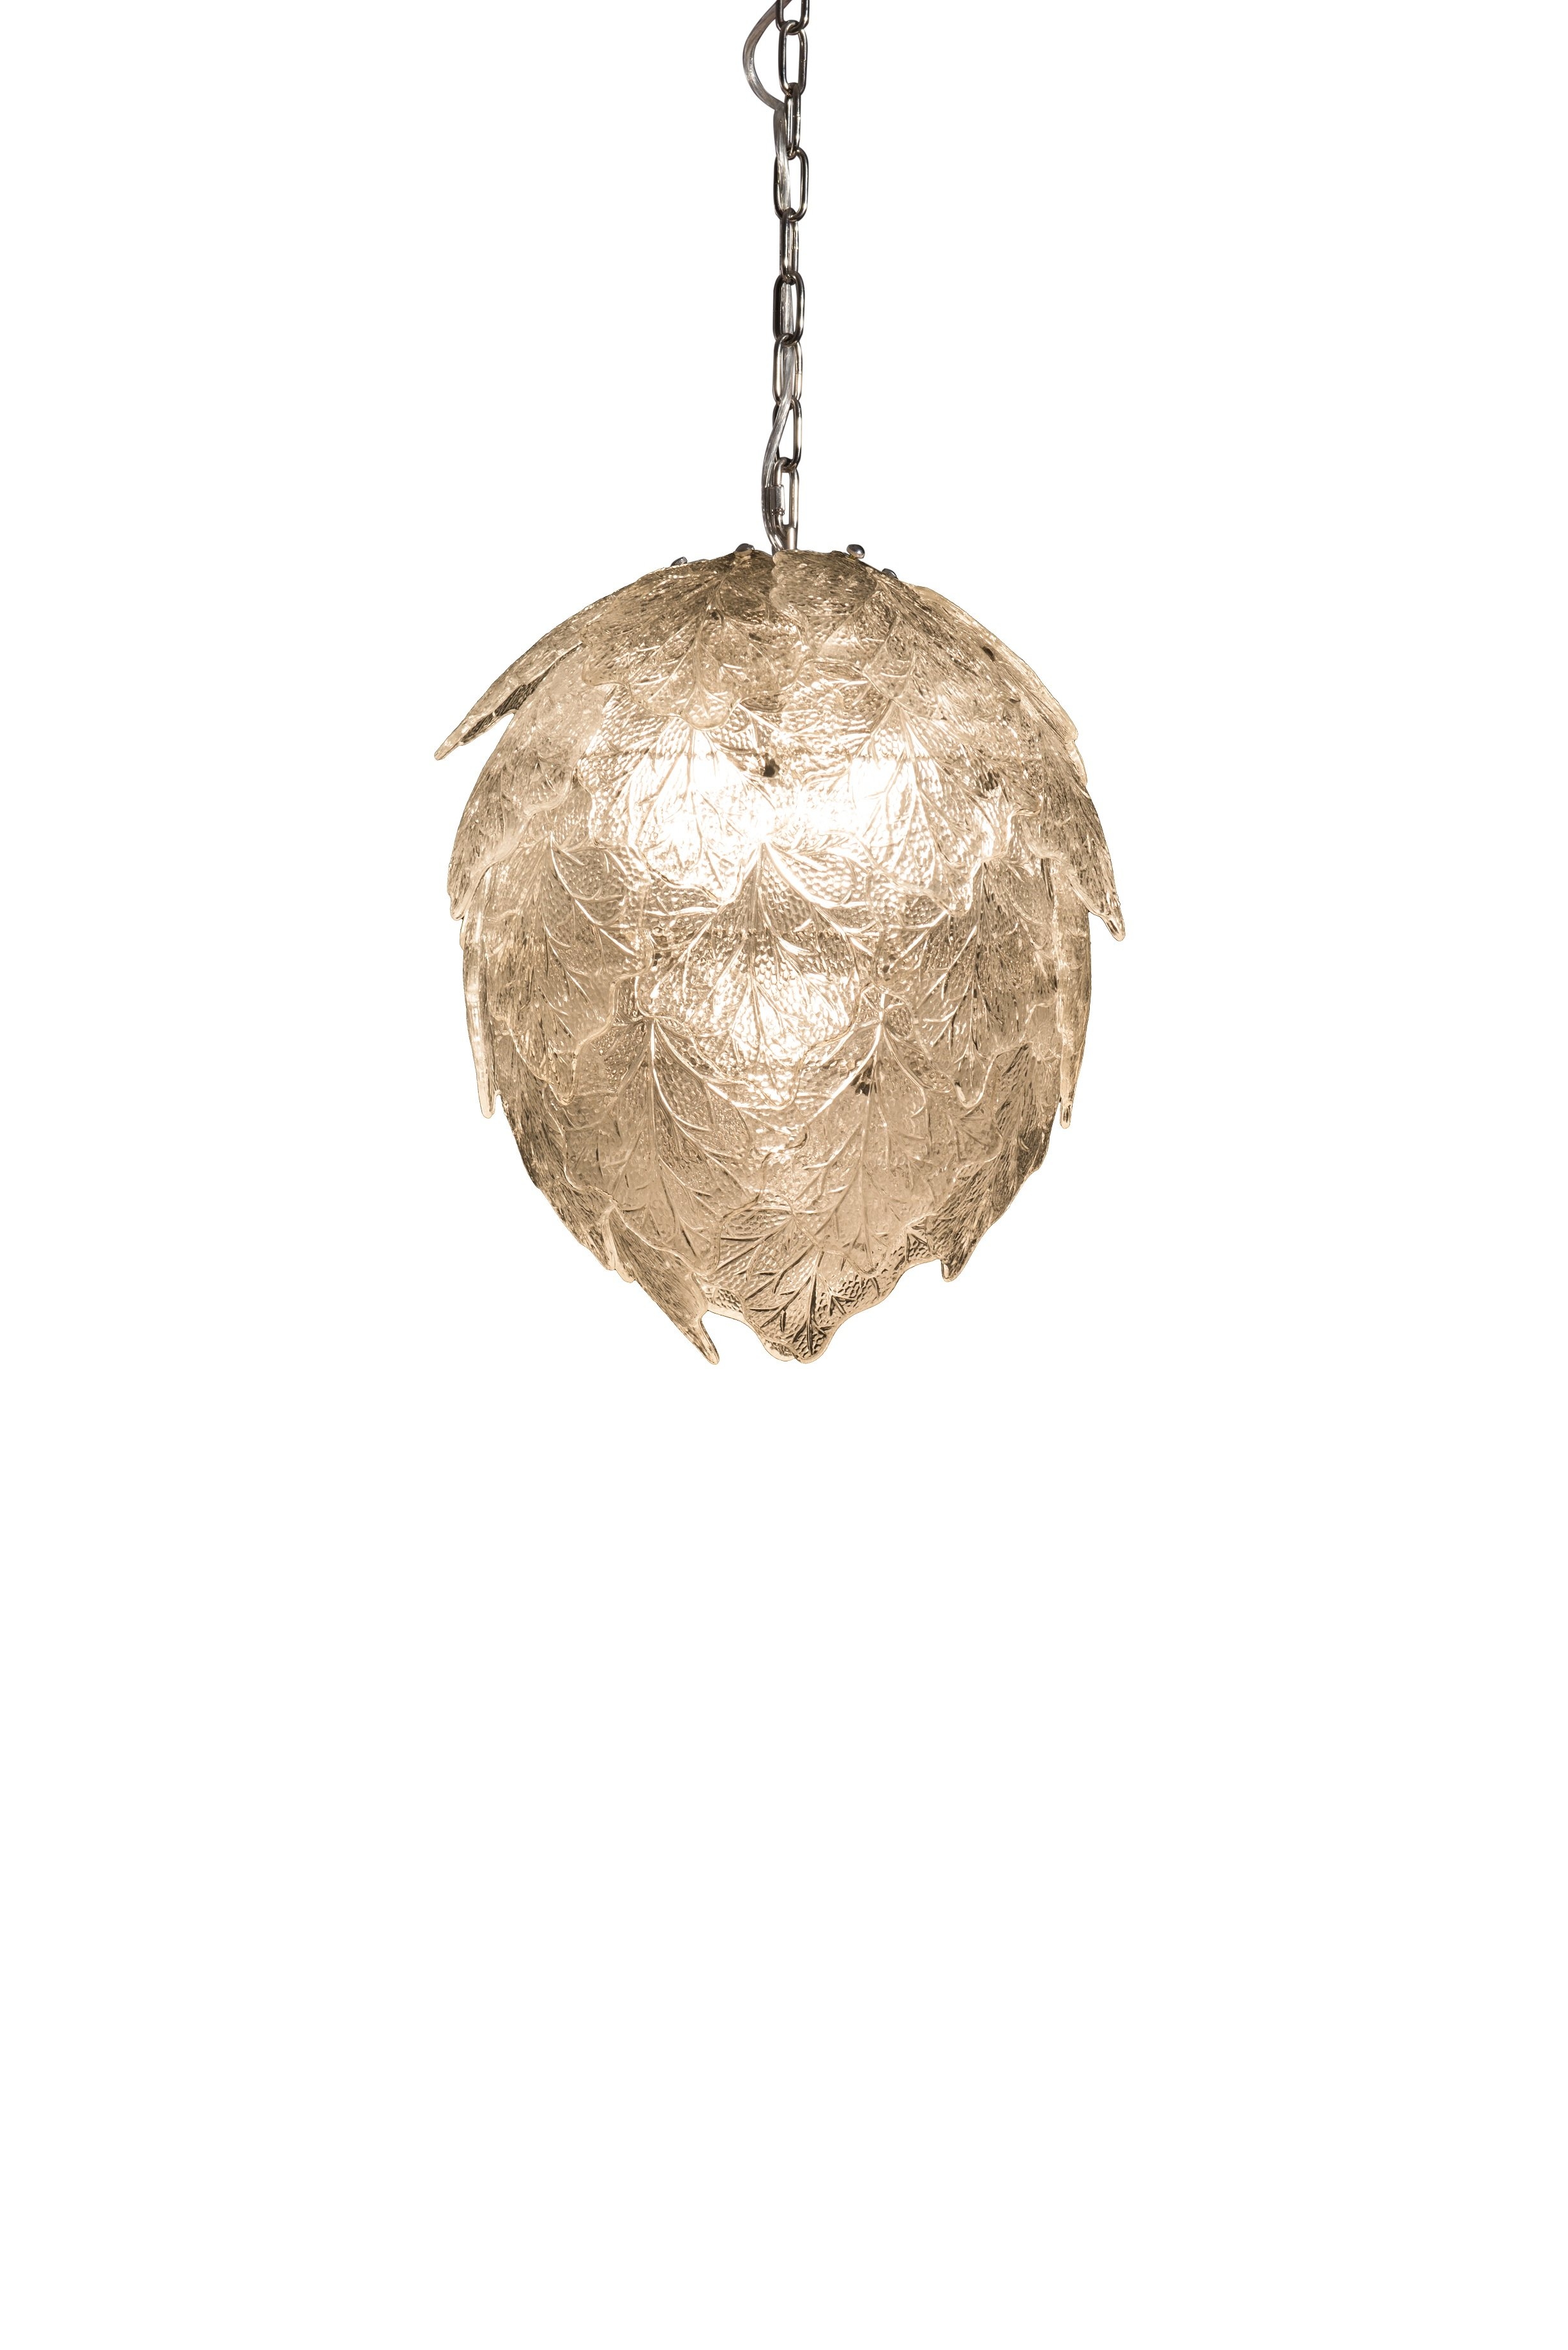 Rv Astley – Pendant light – Ametrine Clear Glass Leaf – small – large – Ametrine Small (Weight 16kg) – Pendant Lights – Stylishly Sophisticated